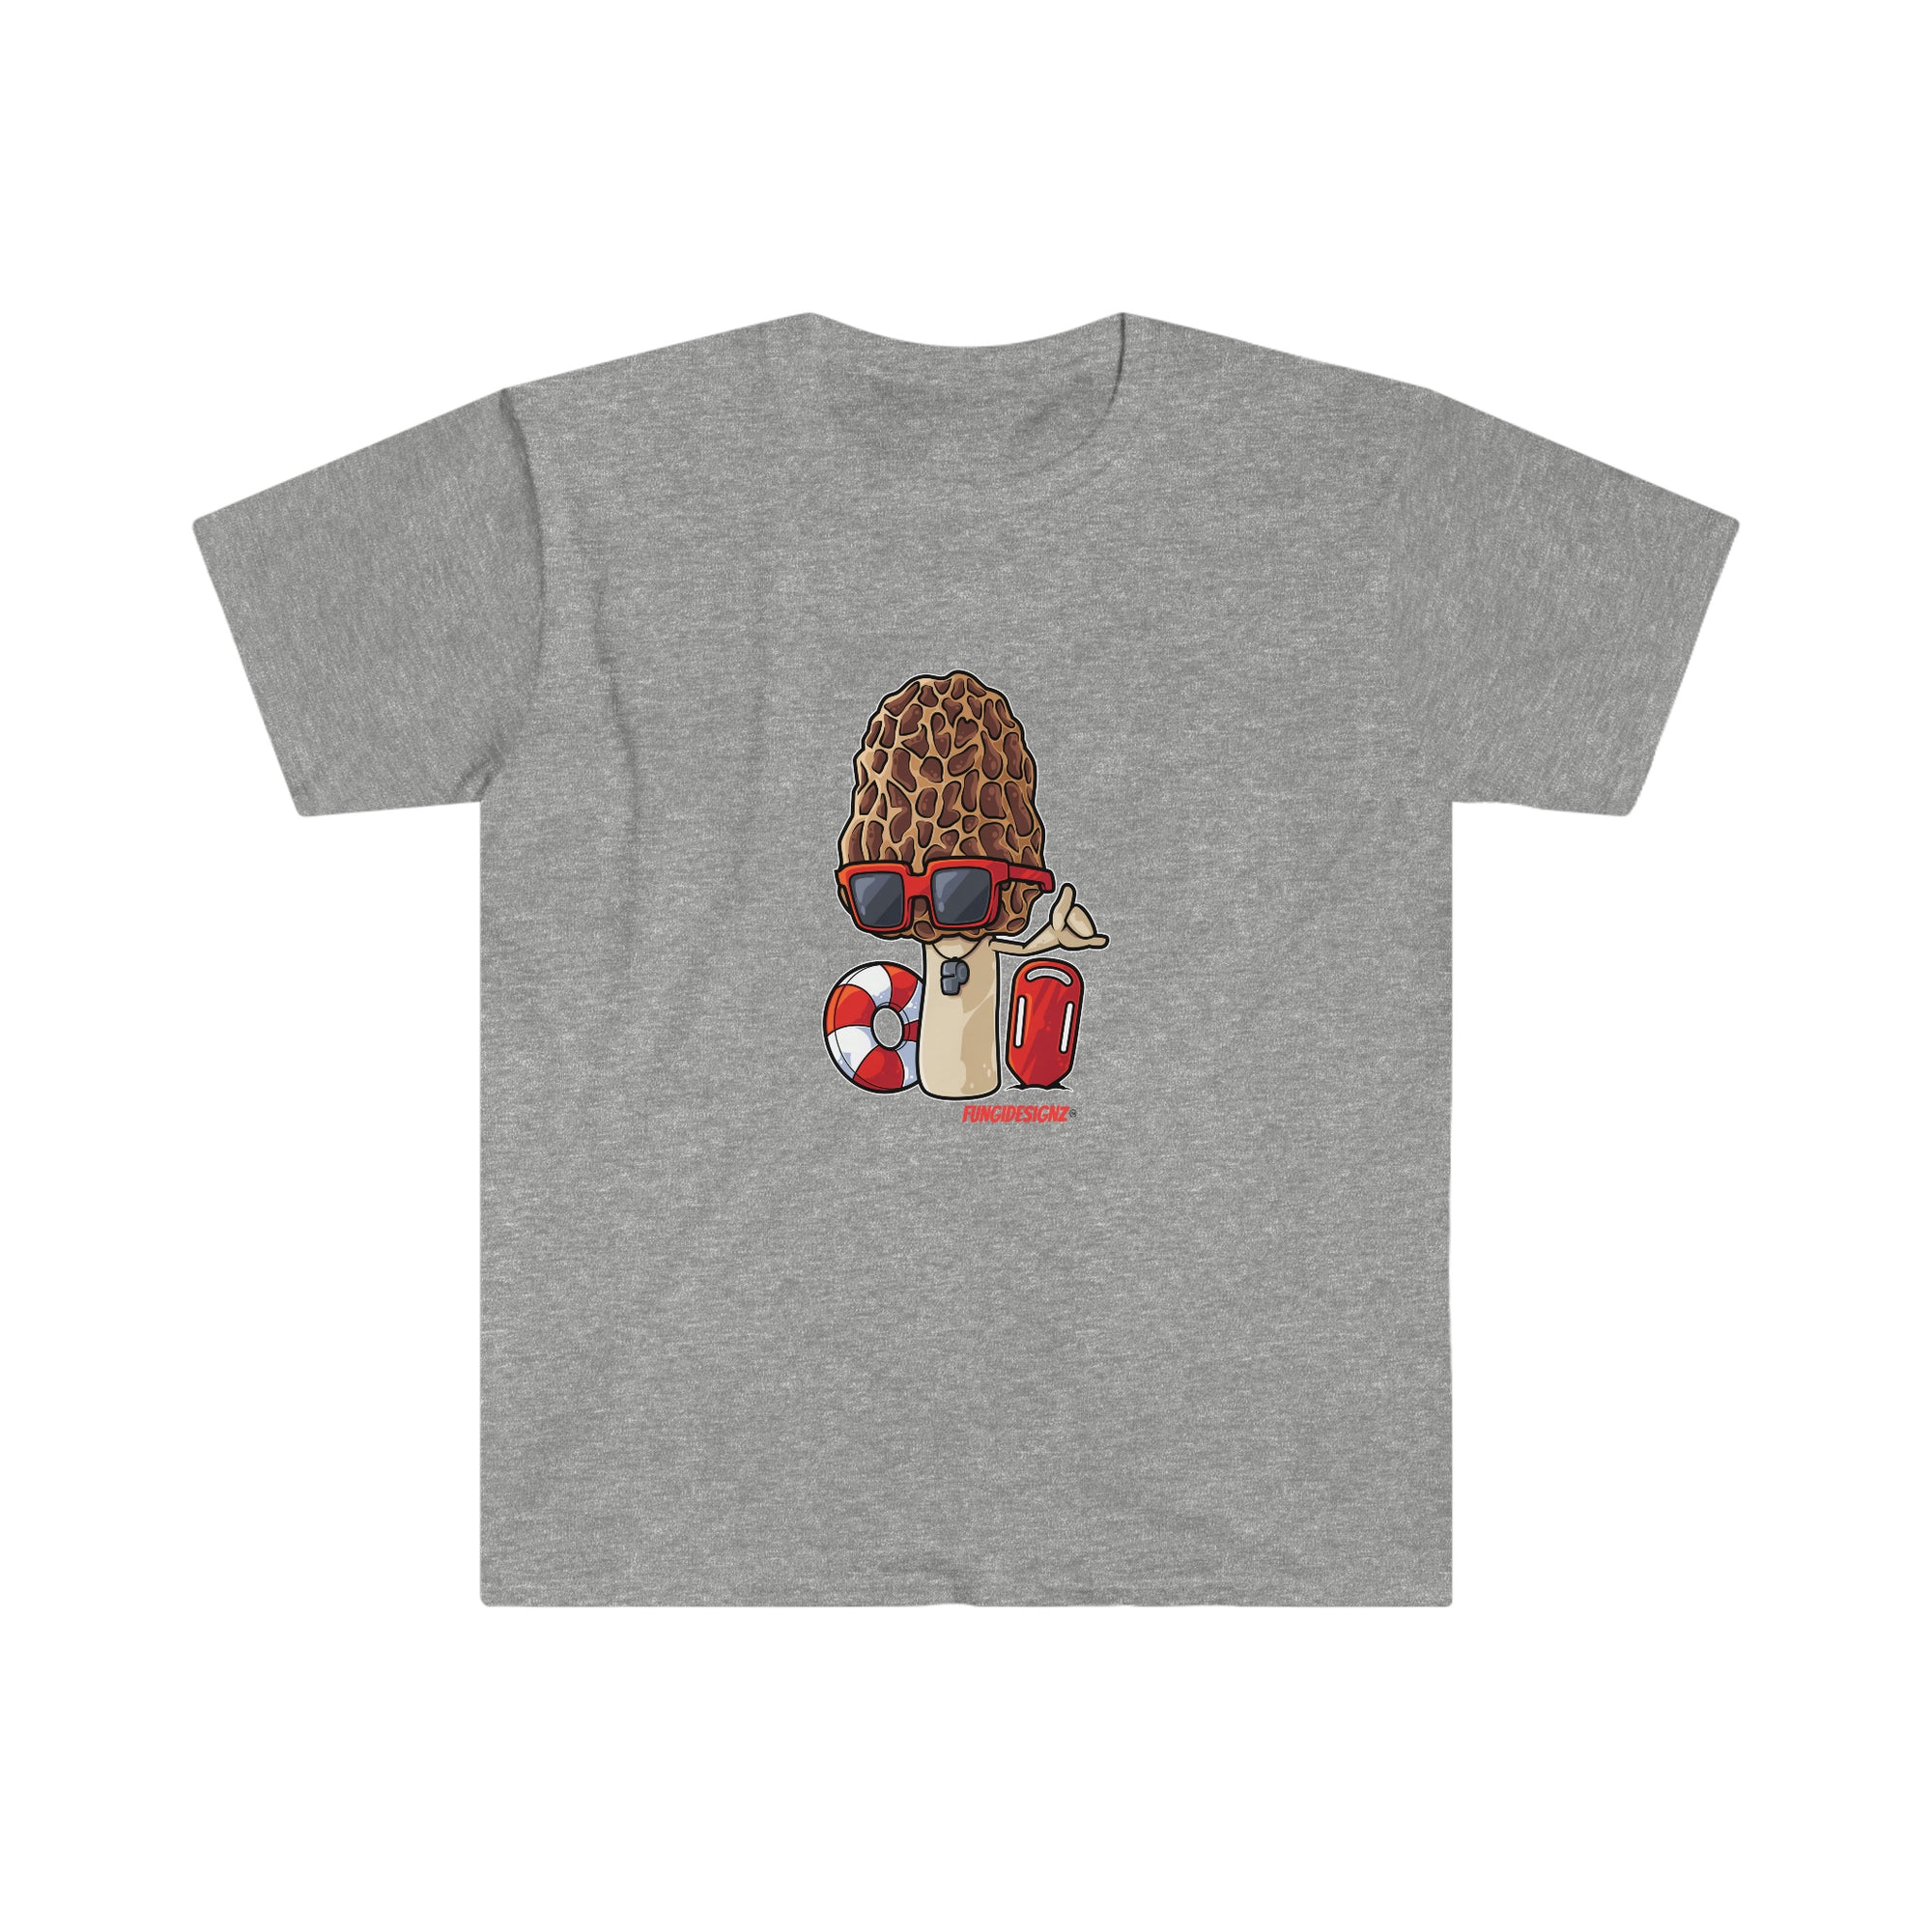 Moe The Morel - Mushroom T-Shirt